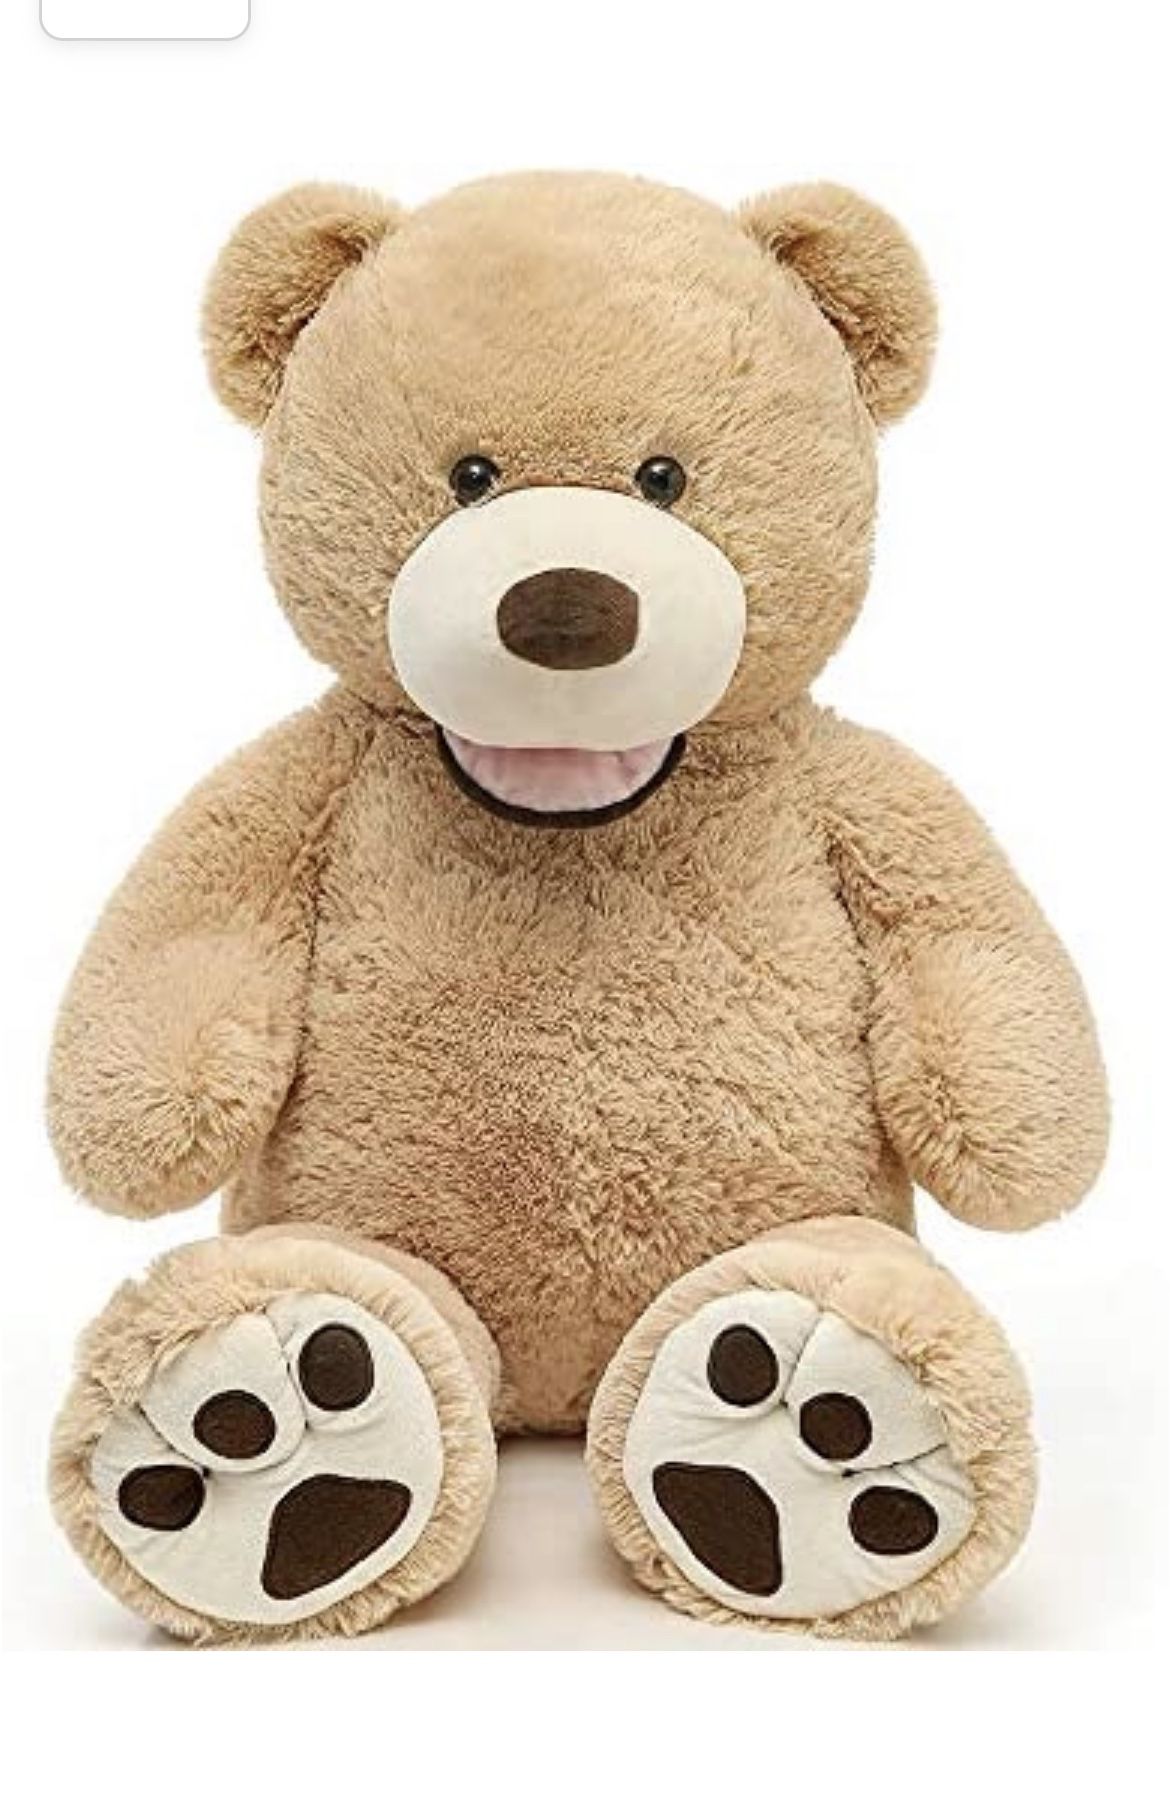 MaoGoLan Giant Teddy Bears Large Plush 39 Inch Stuffed Animals Toy with Footprints Big Teddy Bear for Girlfriend Children Light Brown